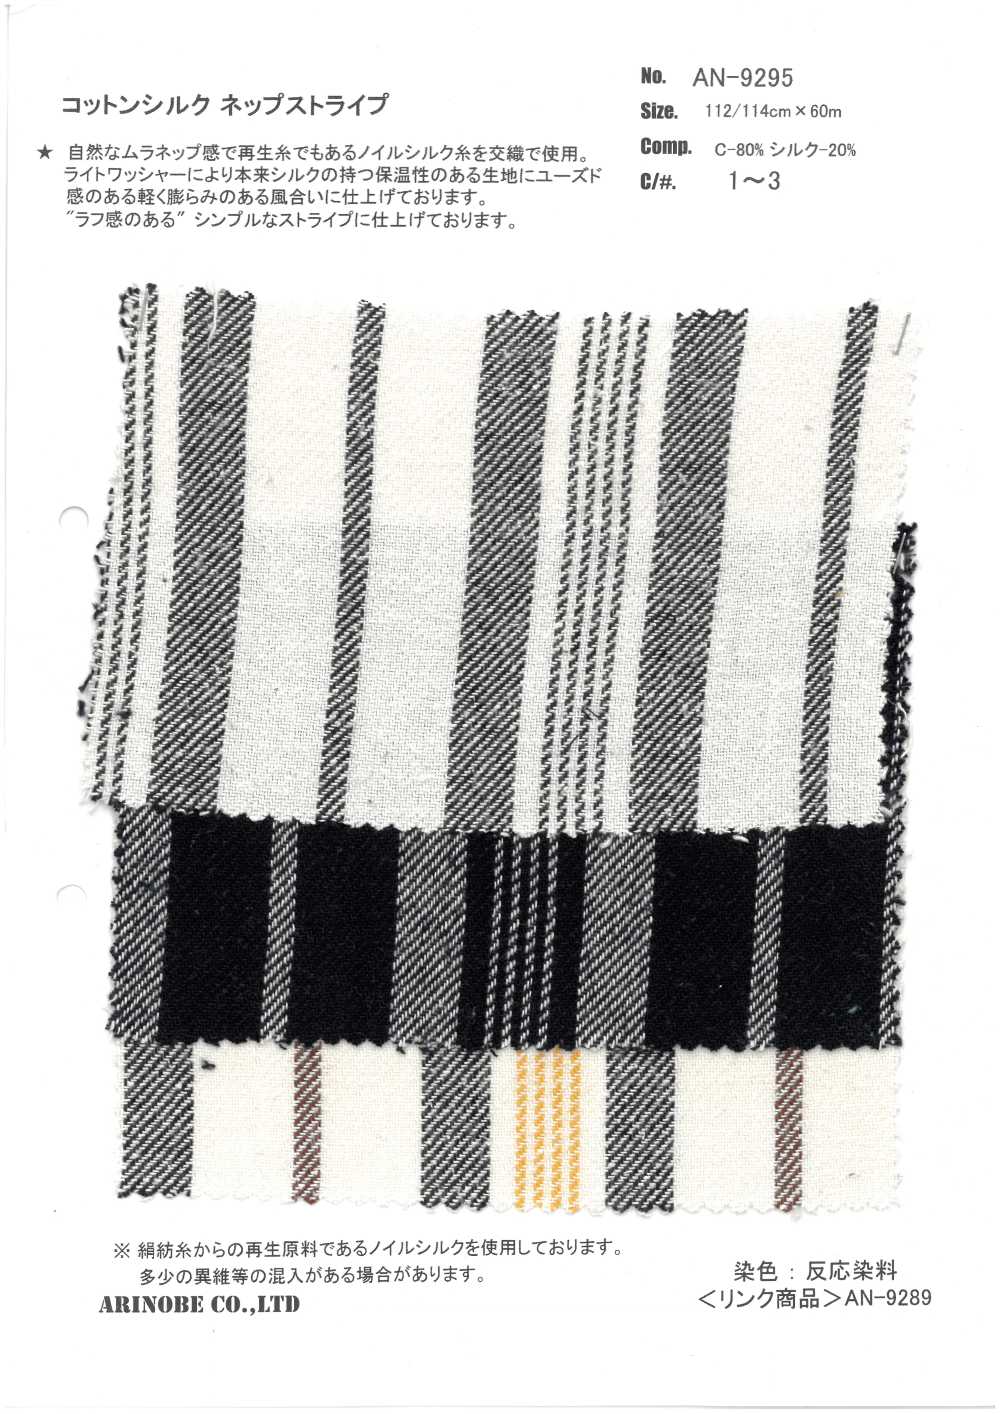 AN-9295 Coton Soie Nep Stripe[Fabrication De Textile] ARINOBE CO., LTD.